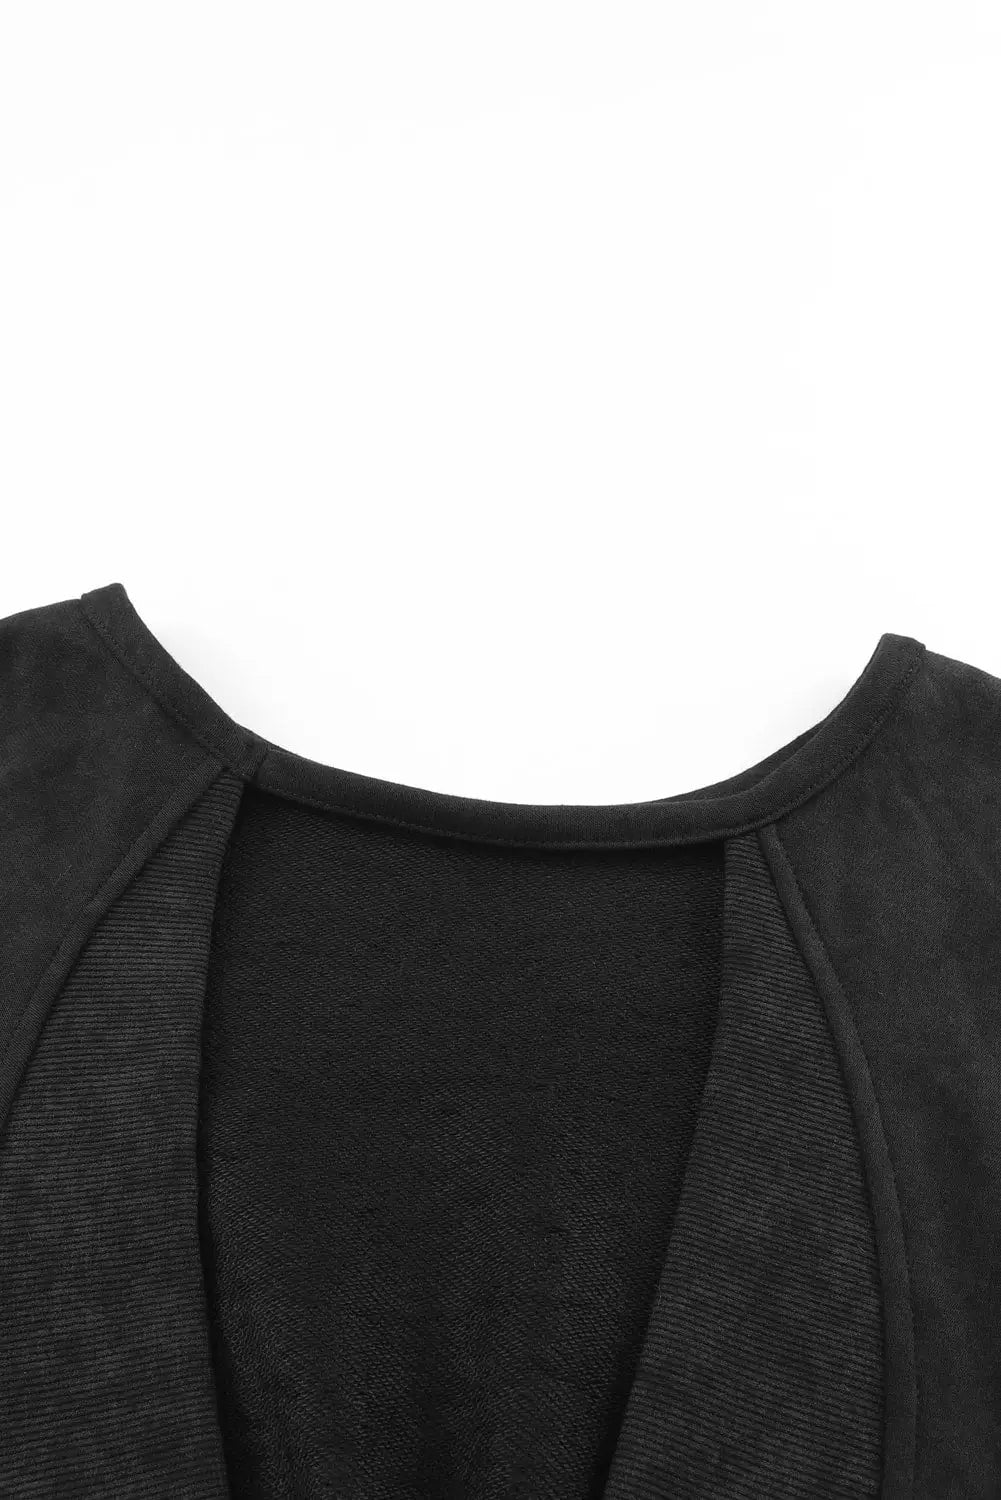 Black acid wash v - shape open back sweatshirt - tops